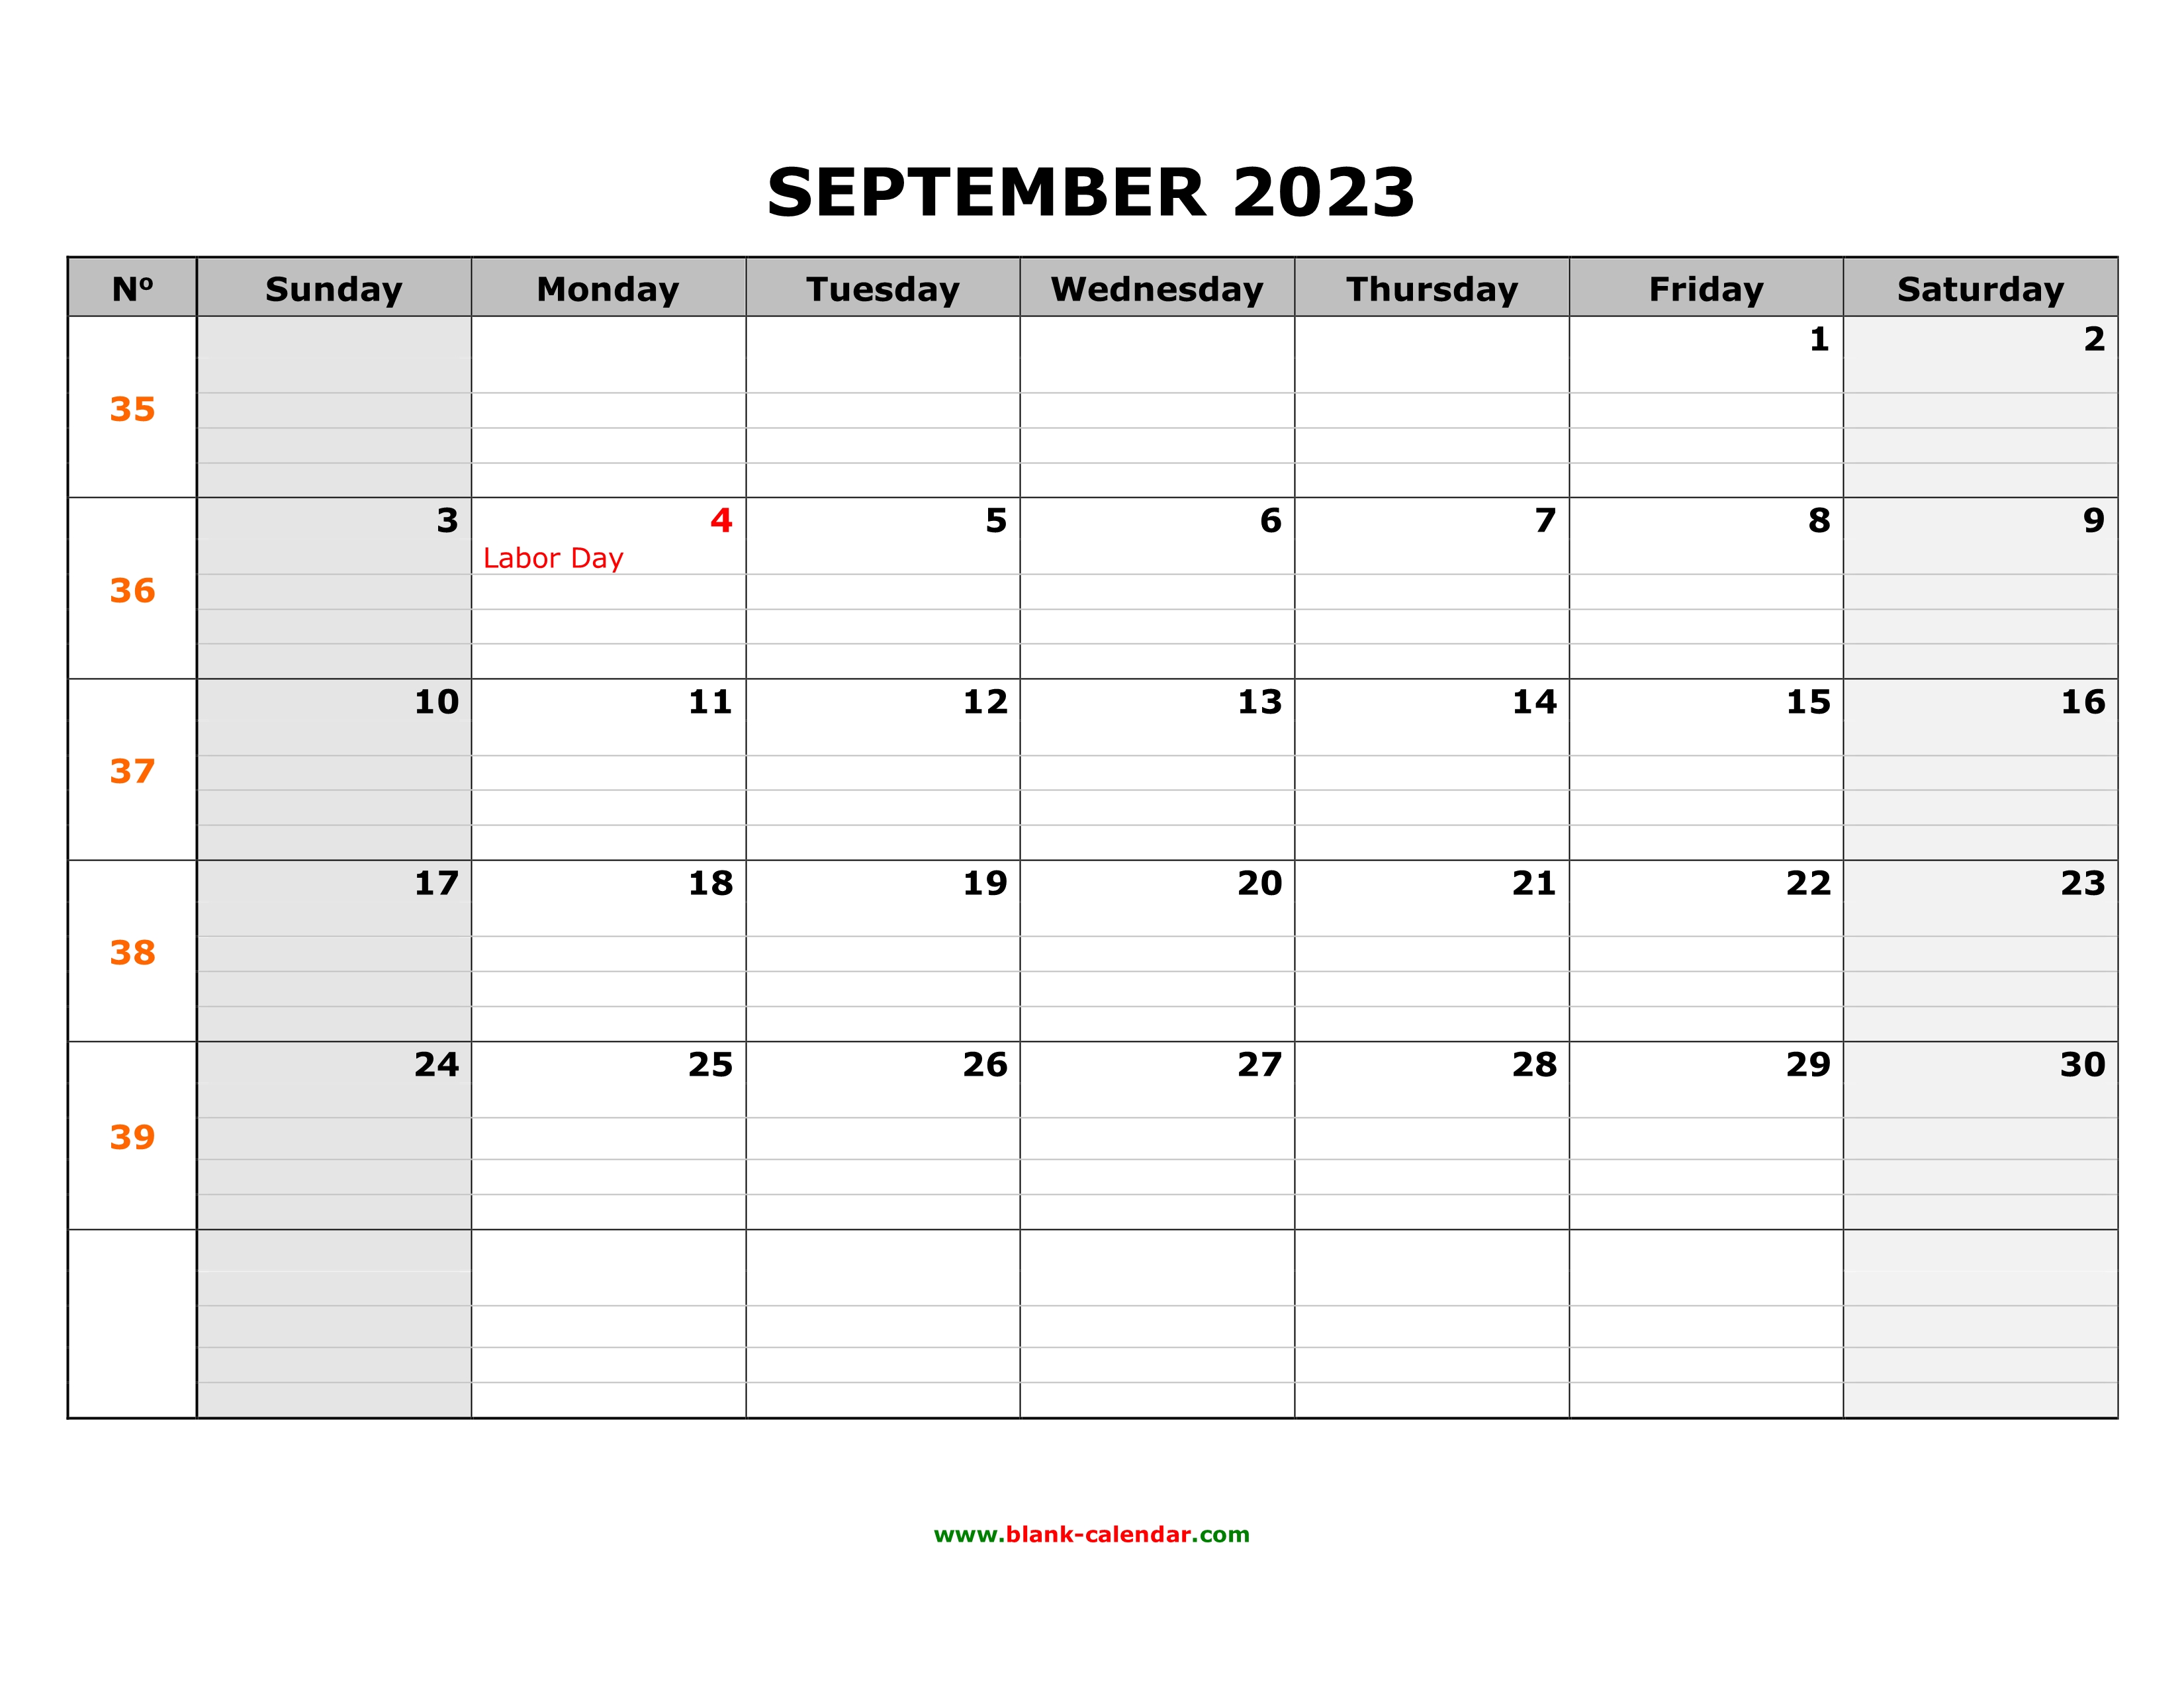 free-download-printable-september-2023-calendar-large-box-grid-space